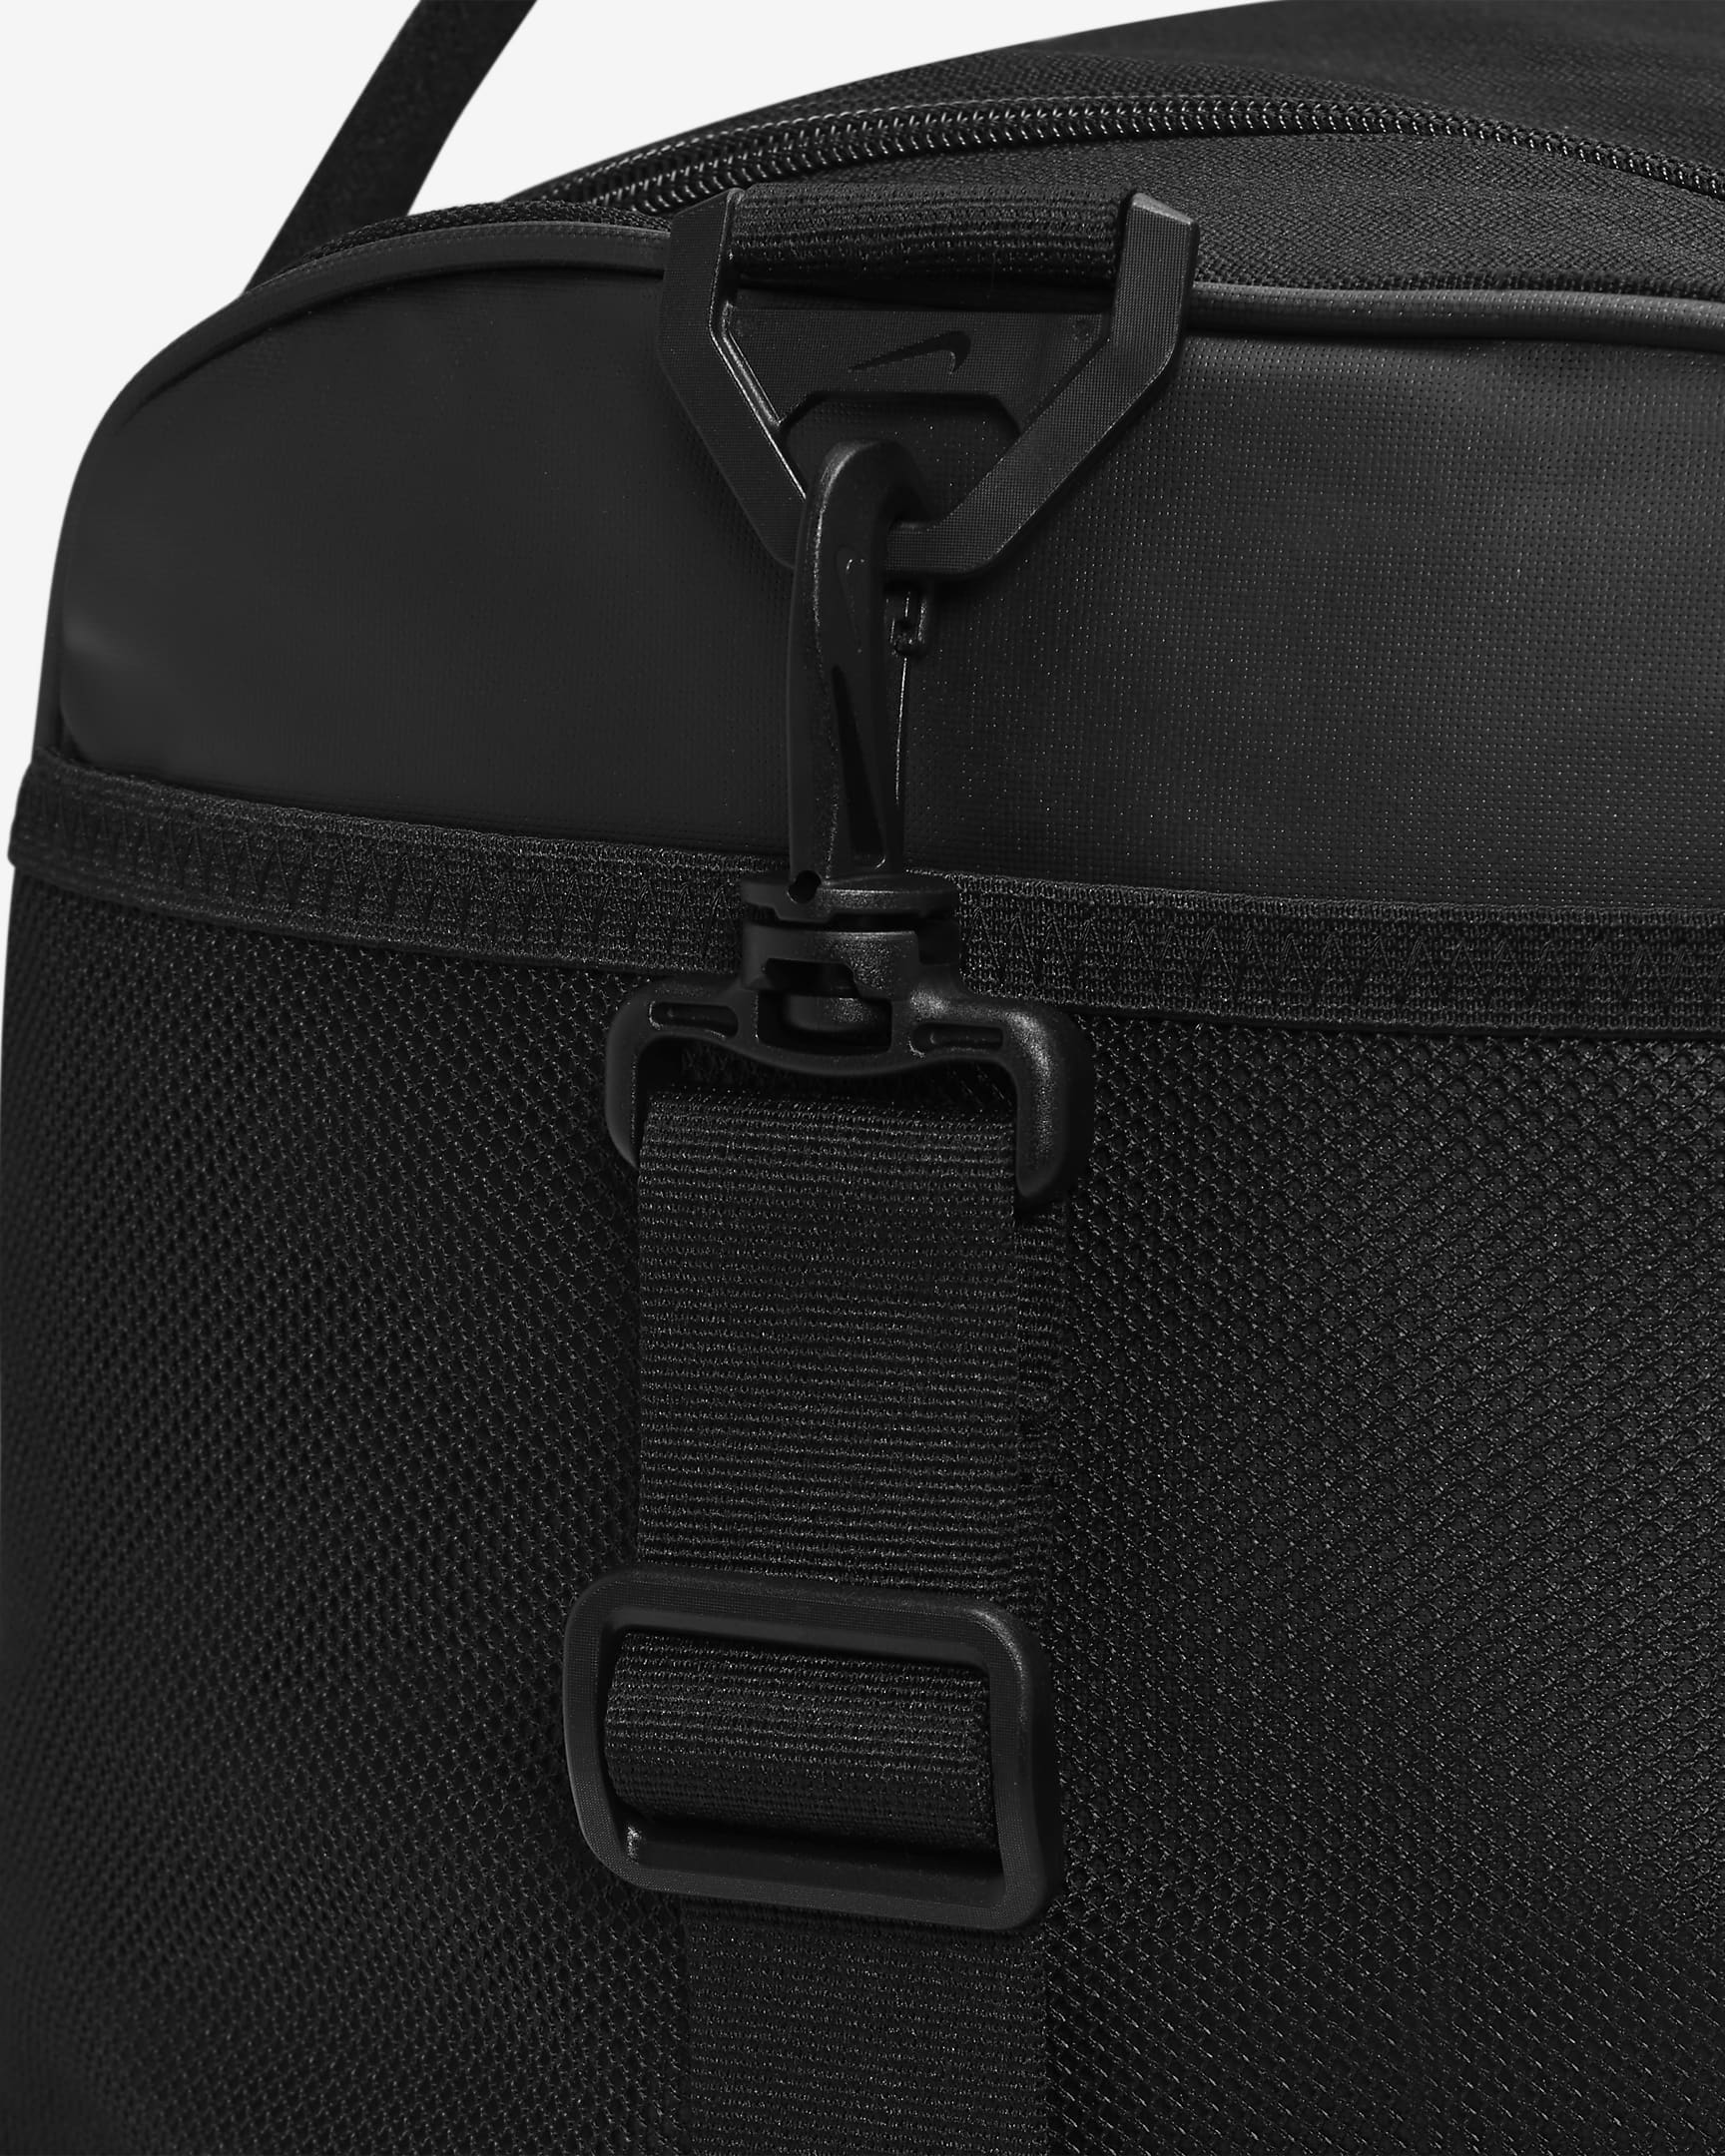 Nike Brasilia 9.5 Training Duffel Bag (Medium, 60L). Nike.com